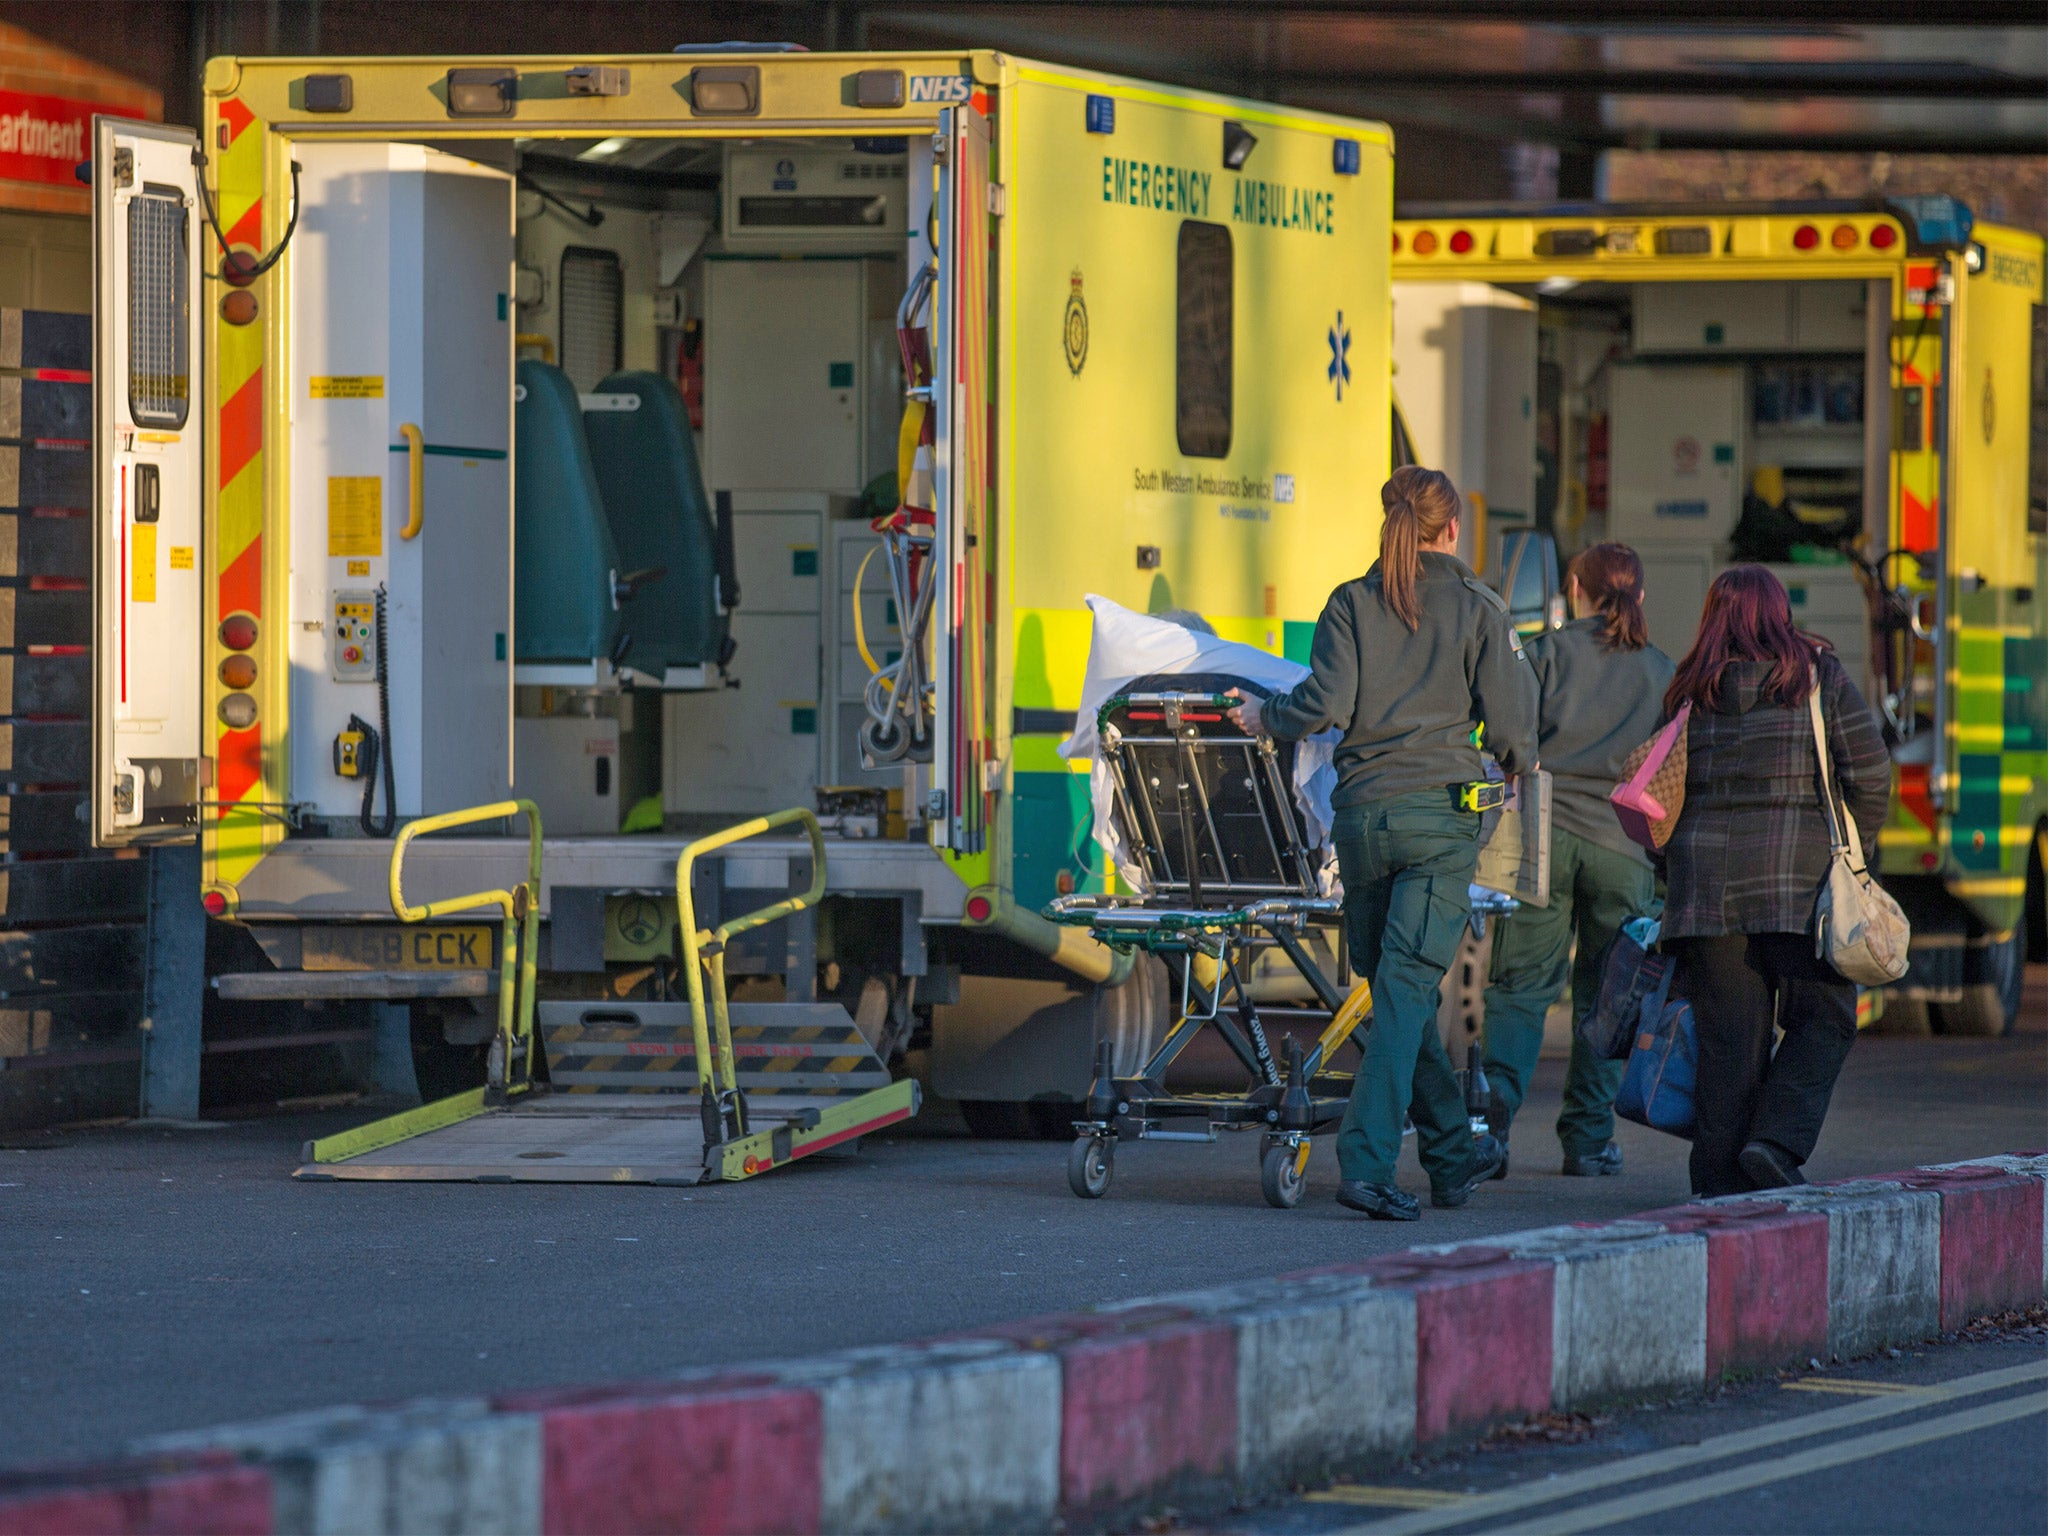 "Unprecedented" demand on A&E departments has put strain on UK hospitals